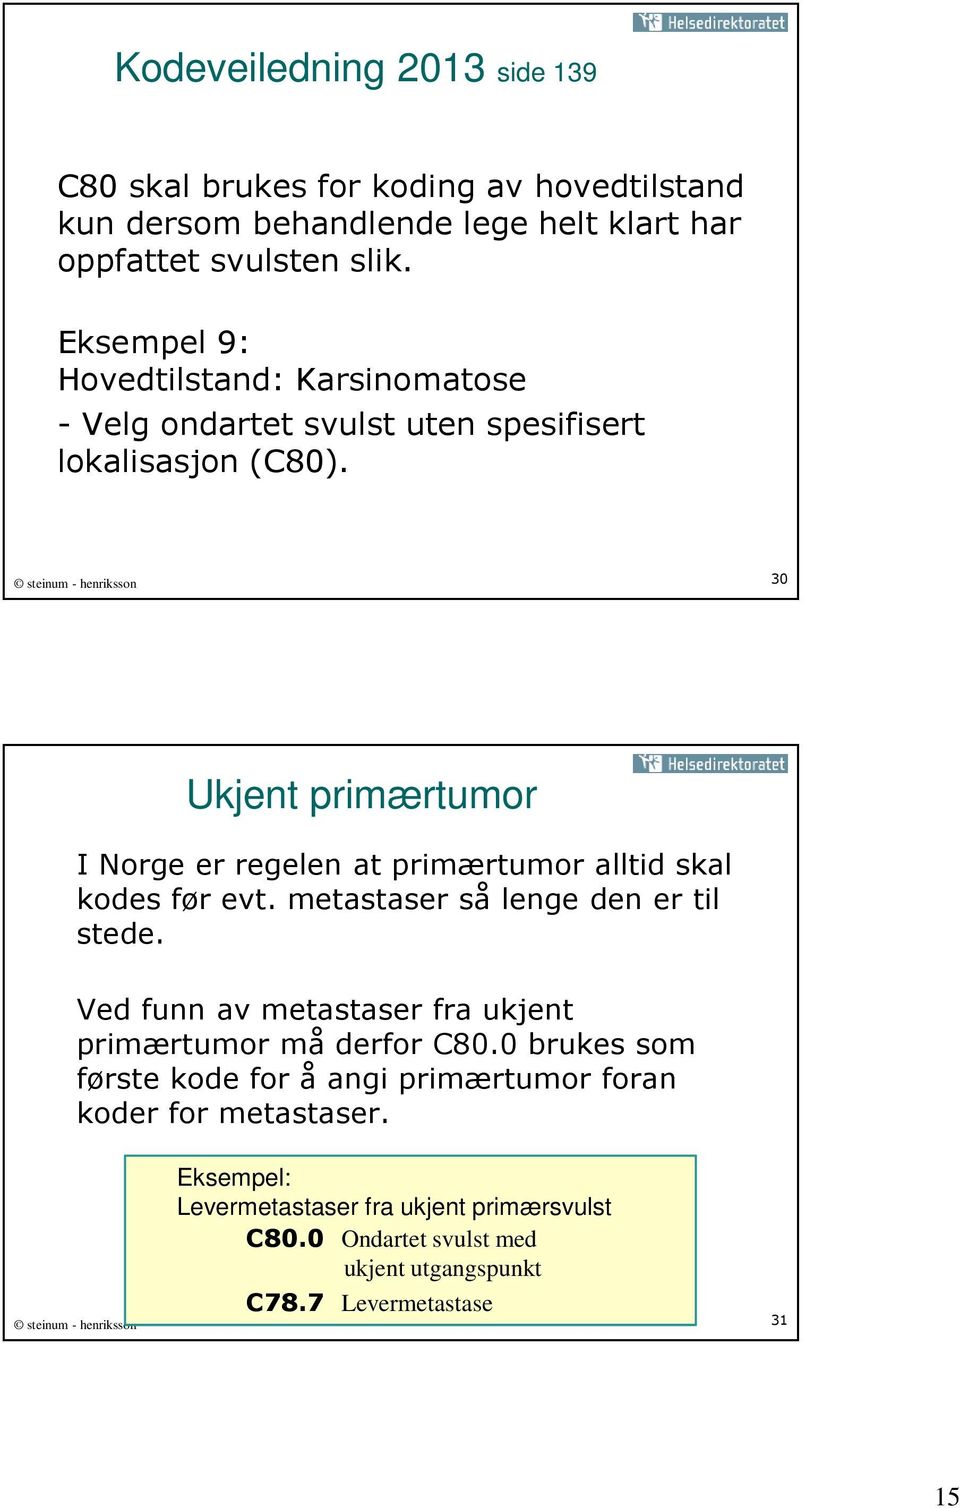 steinum - henriksson 30 Ukjent primærtumor I Norge er regelen at primærtumor alltid skal kodes før evt. metastaser så lenge den er til stede.